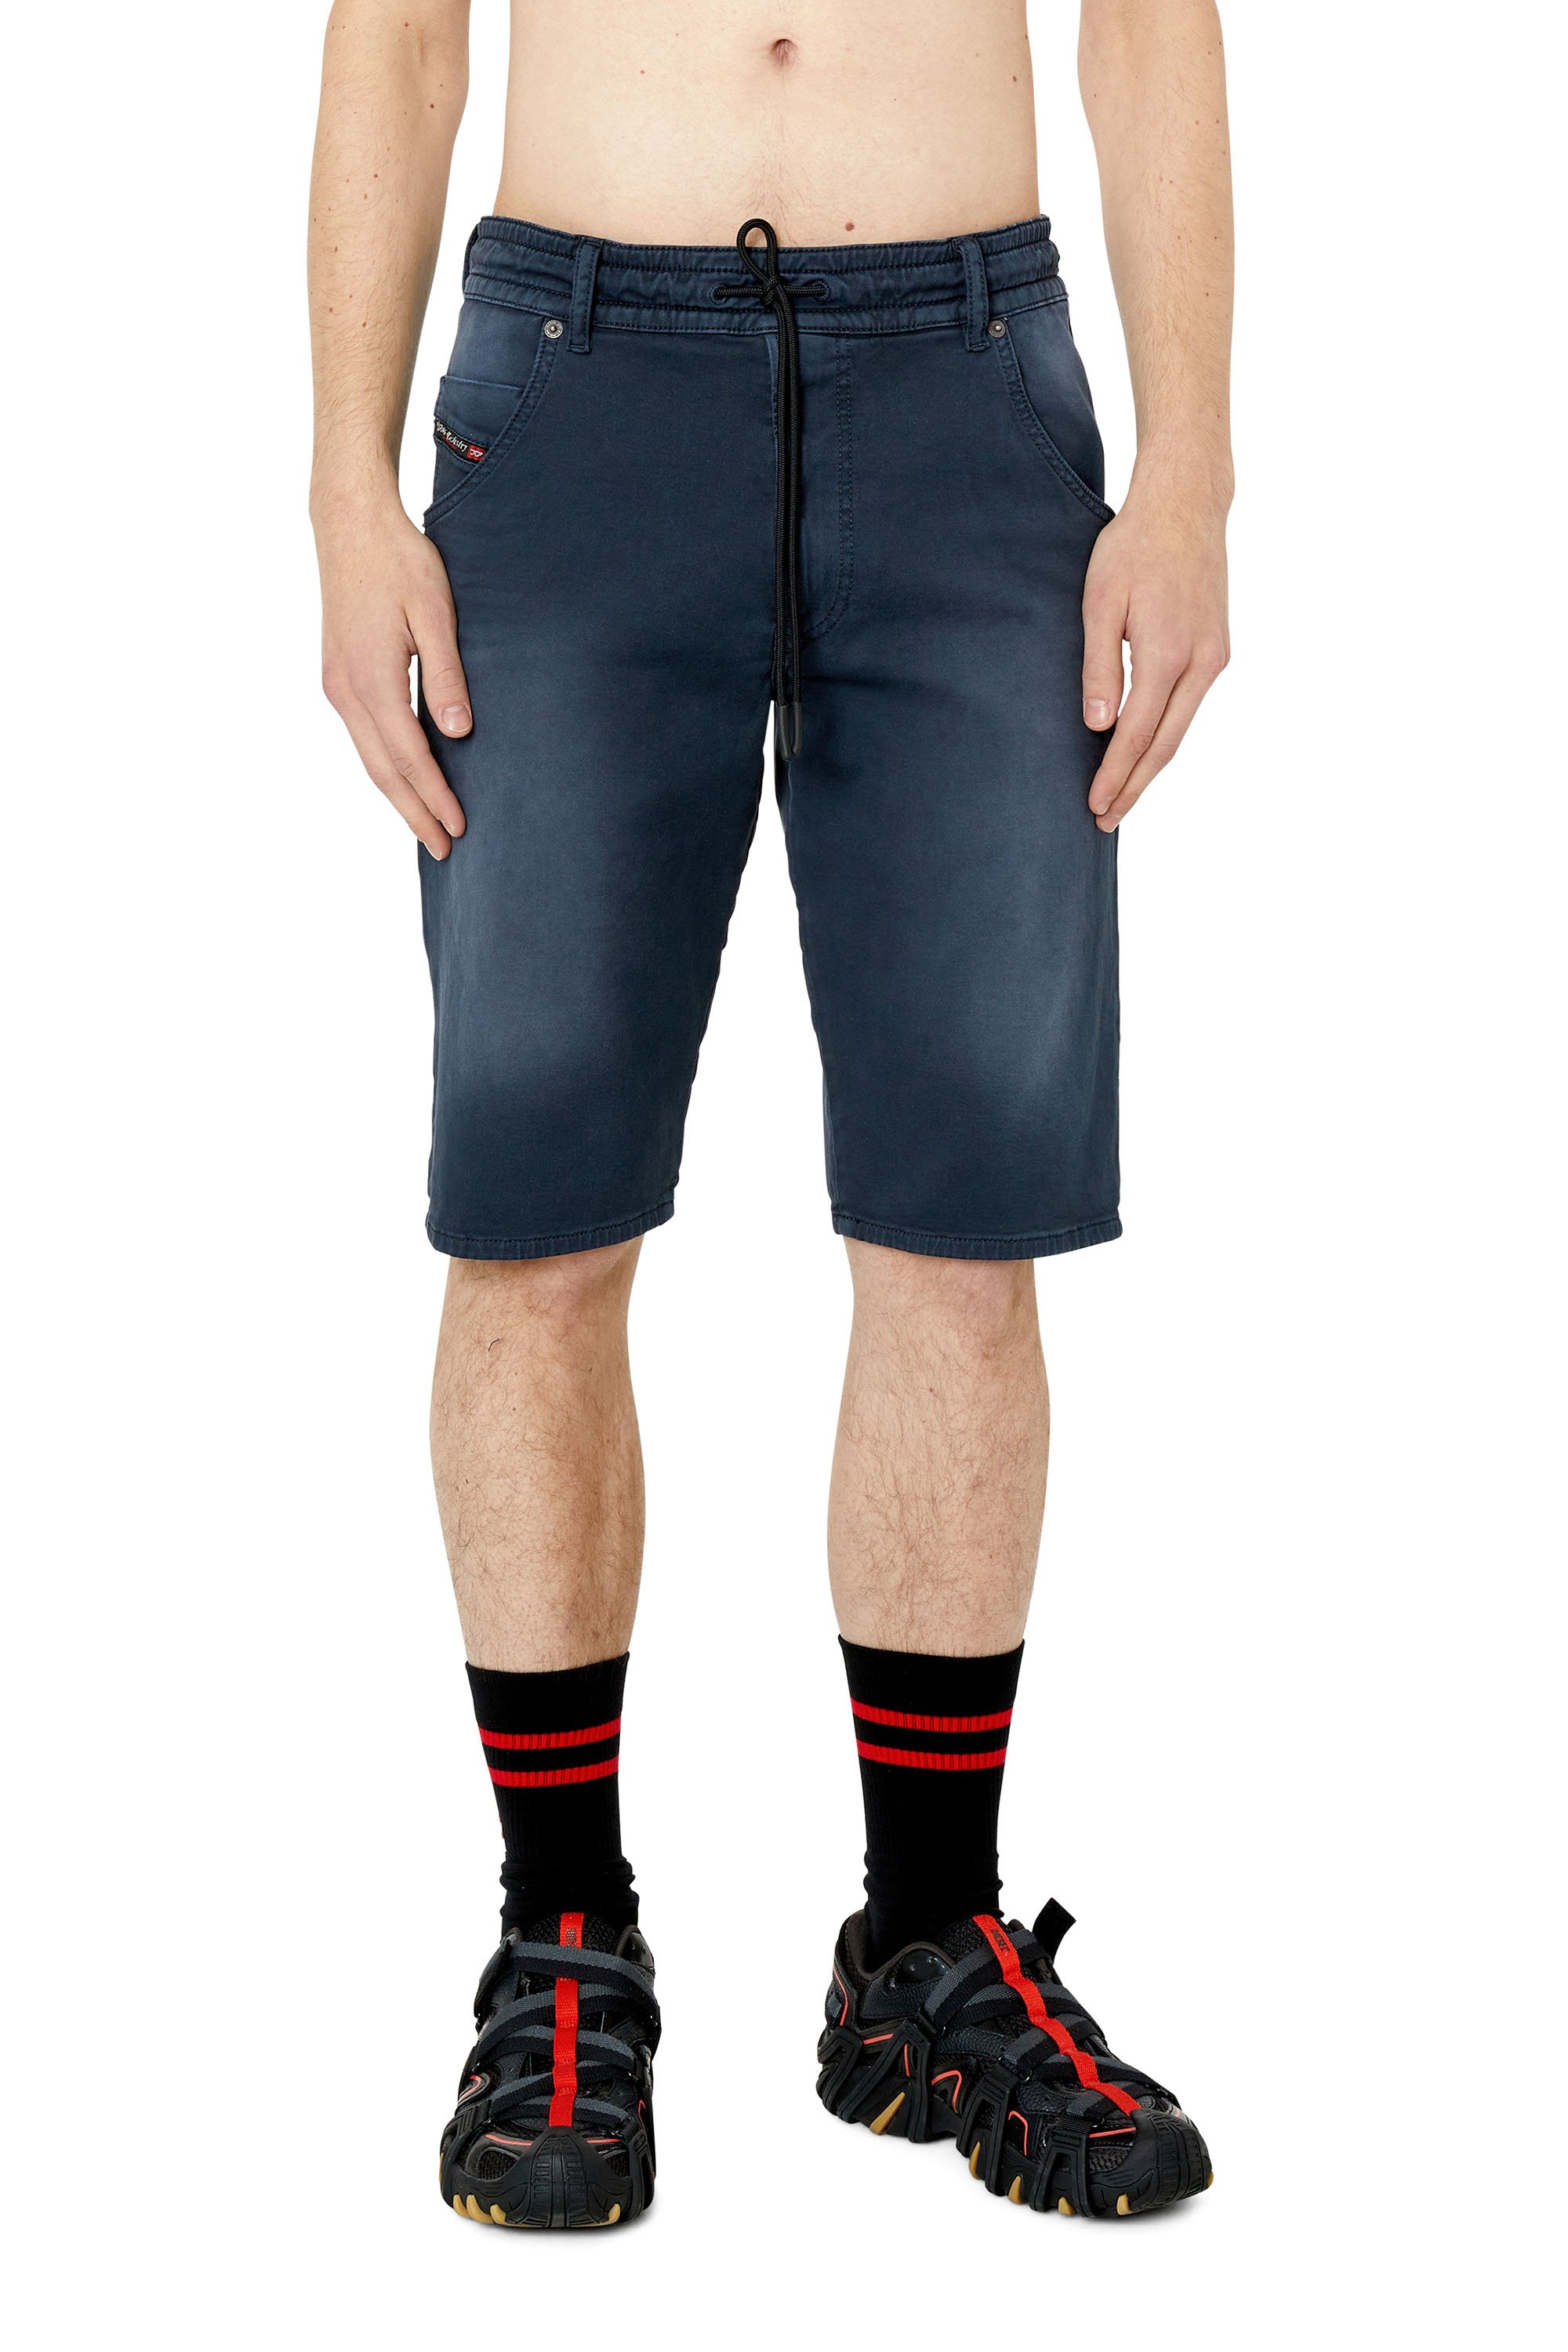 Diesel - D-KROOSHORT-Z JOGGJEANS, Hombre Pantalones cortos de color de JoggJeans® in Azul marino - Image 1